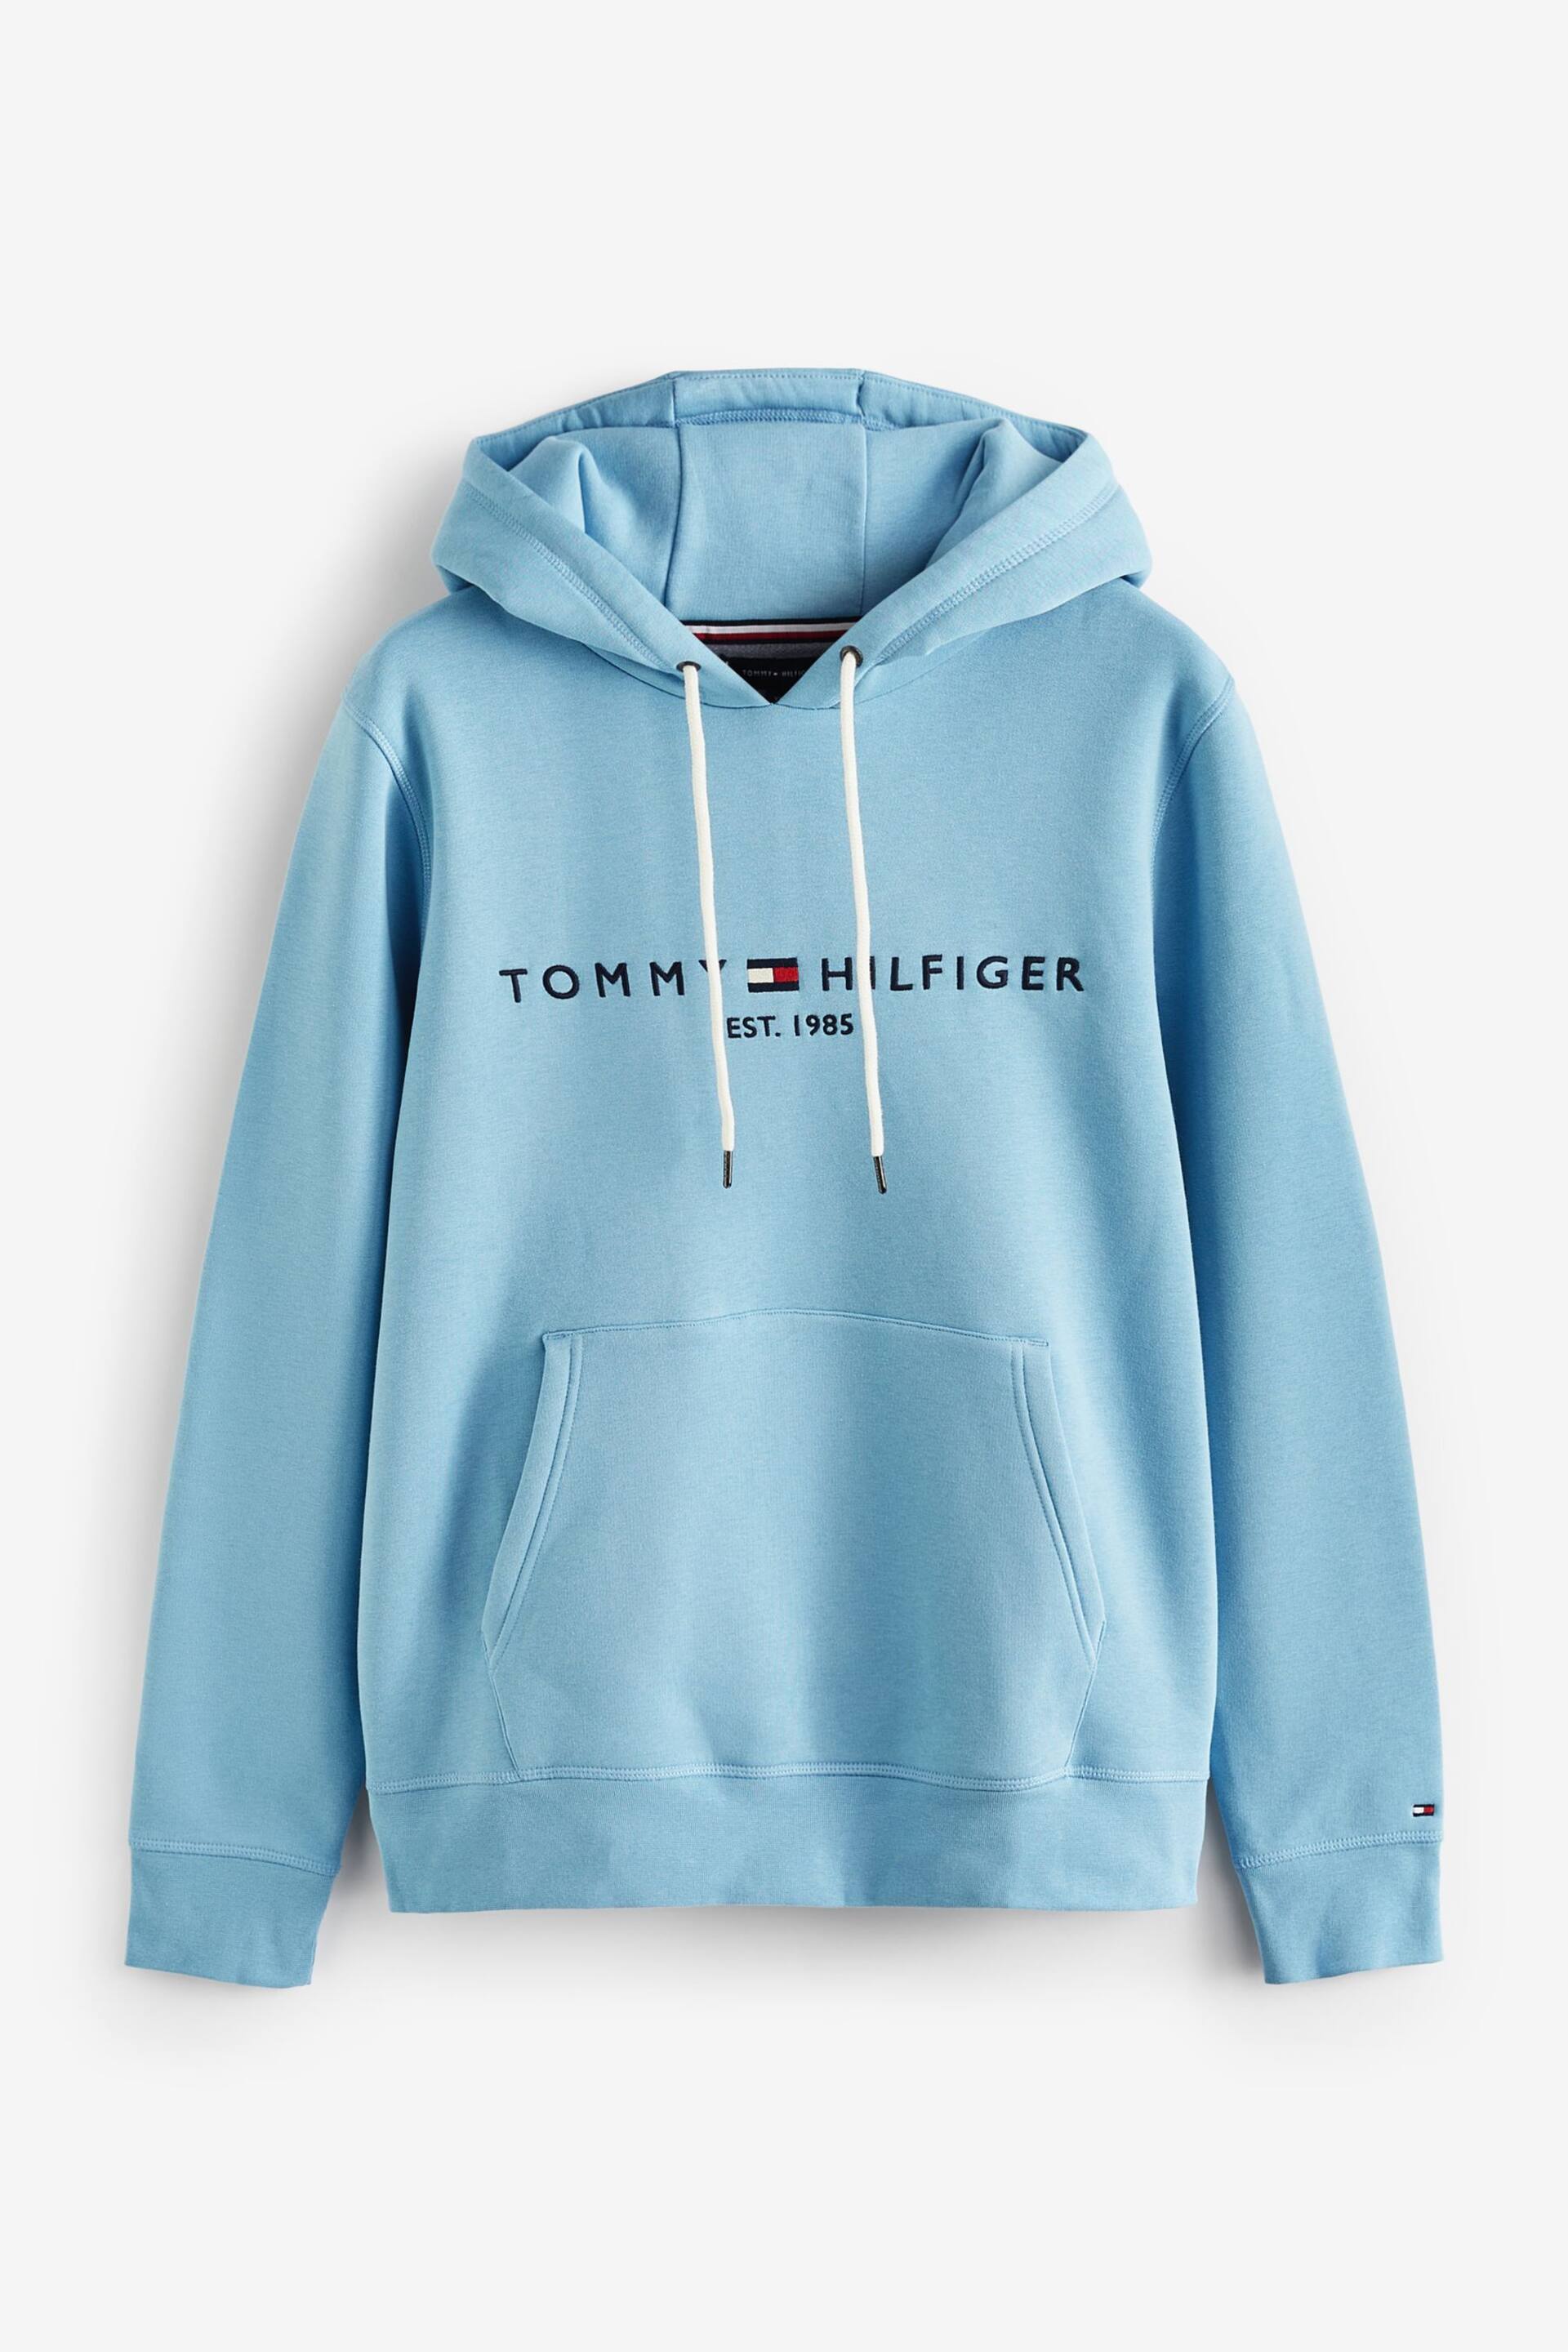 Tommy Hilfiger Blue Logo Hoodie - Image 4 of 4